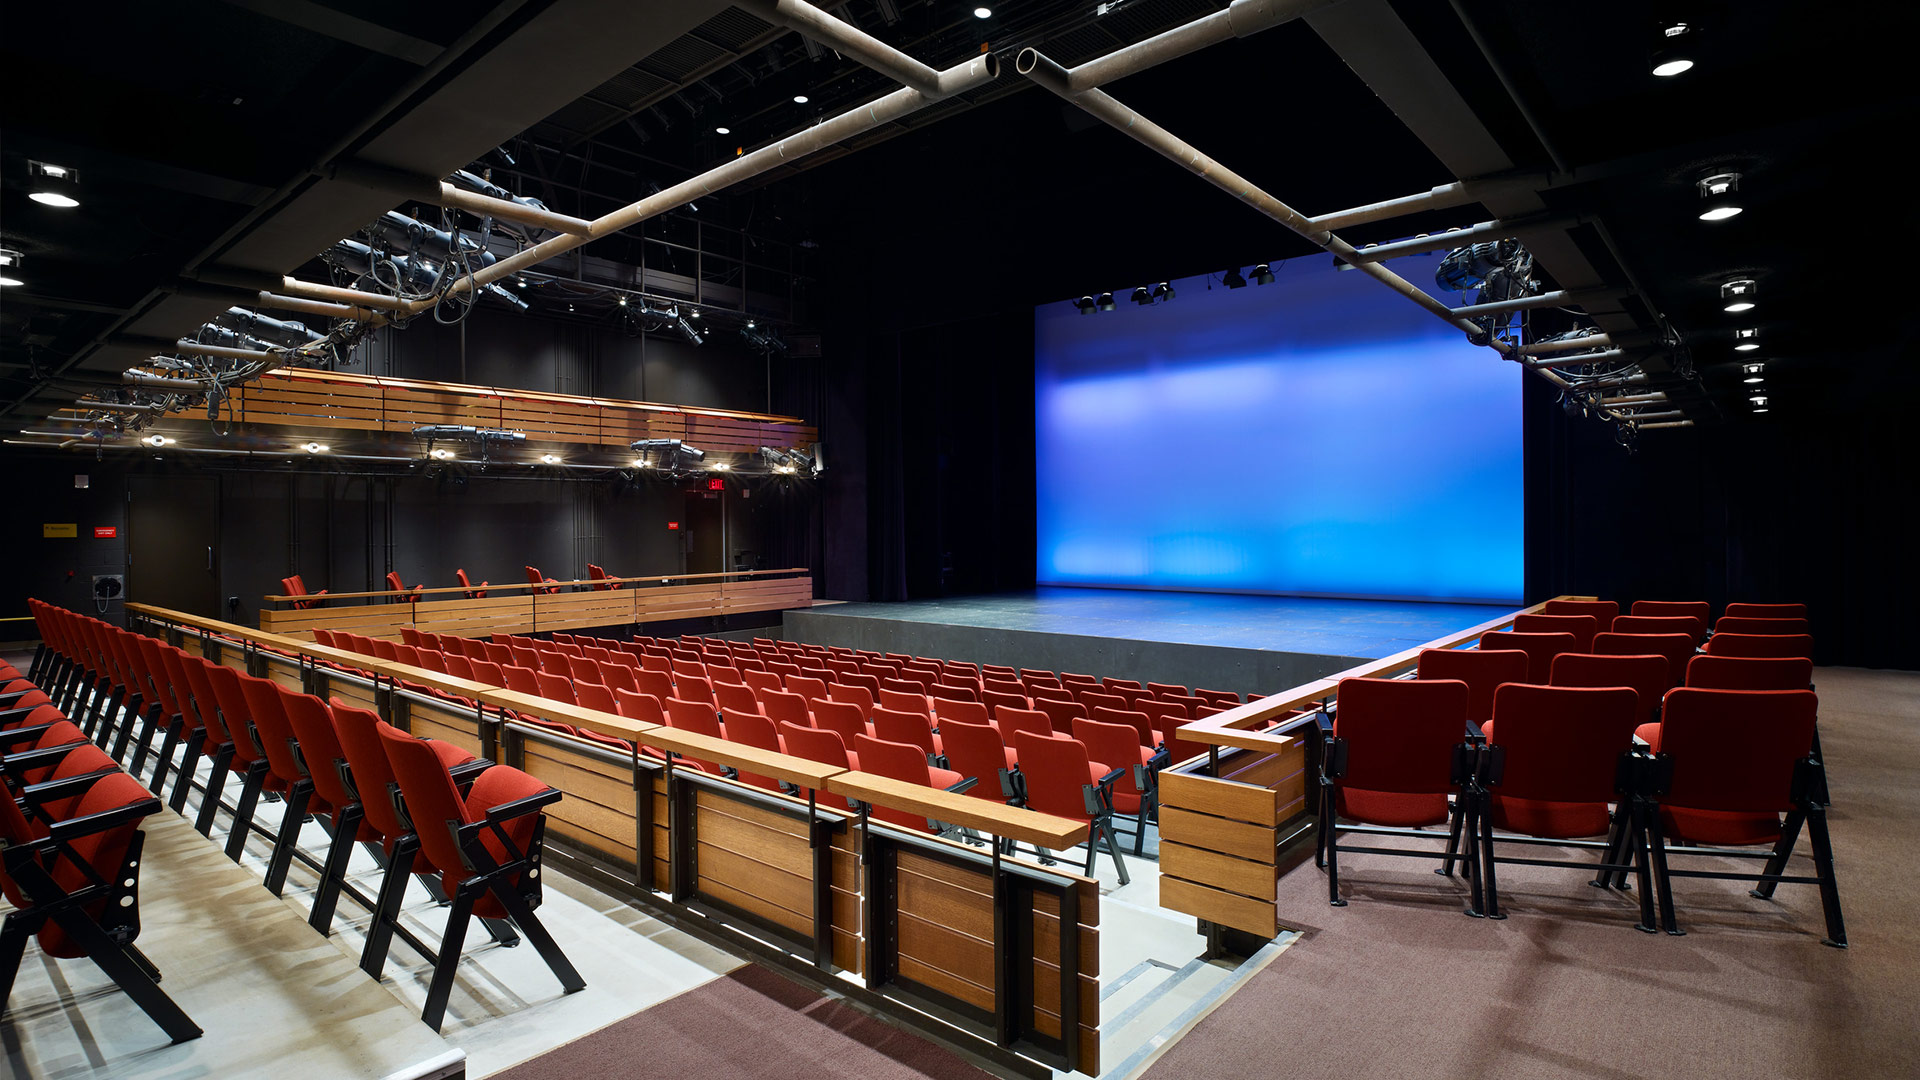 University of Michigan, Charles R. Walgreen Jr. Drama Center and Arthur Miller Theatre